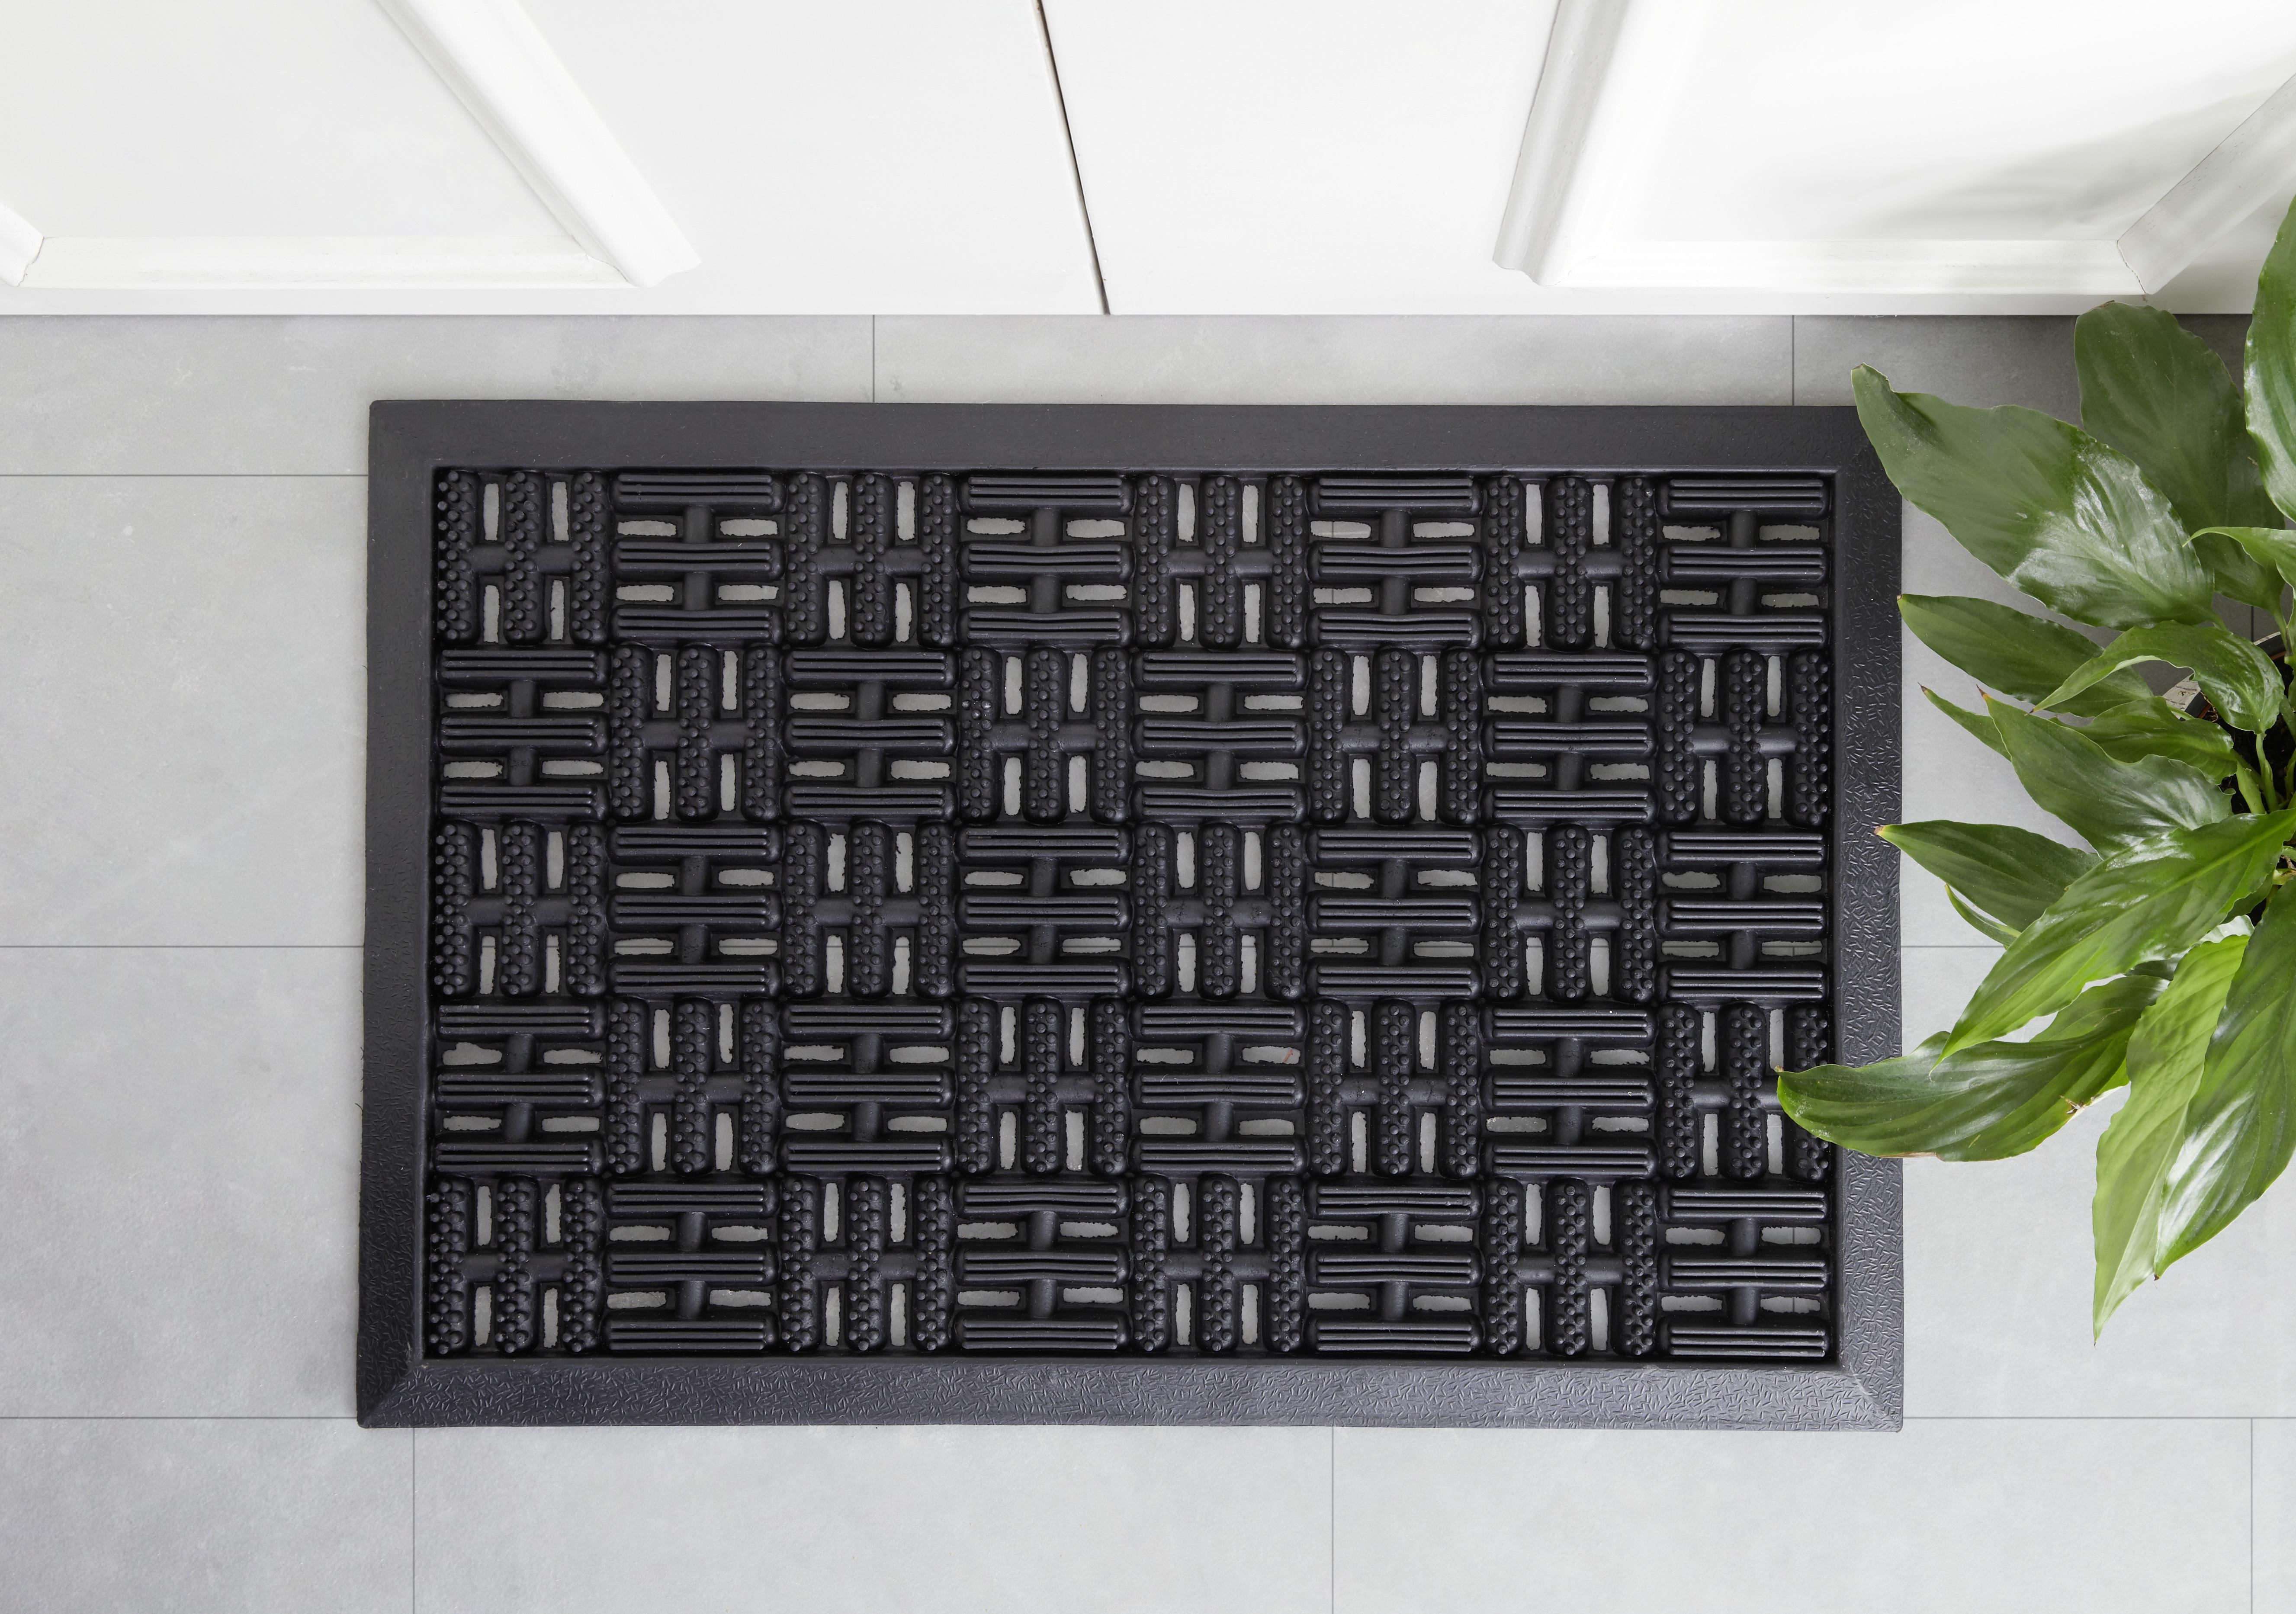 Dveřní Rohožka Karo, 40/60 Cm - černá, Basics, plast (40/60cm) - Modern Living